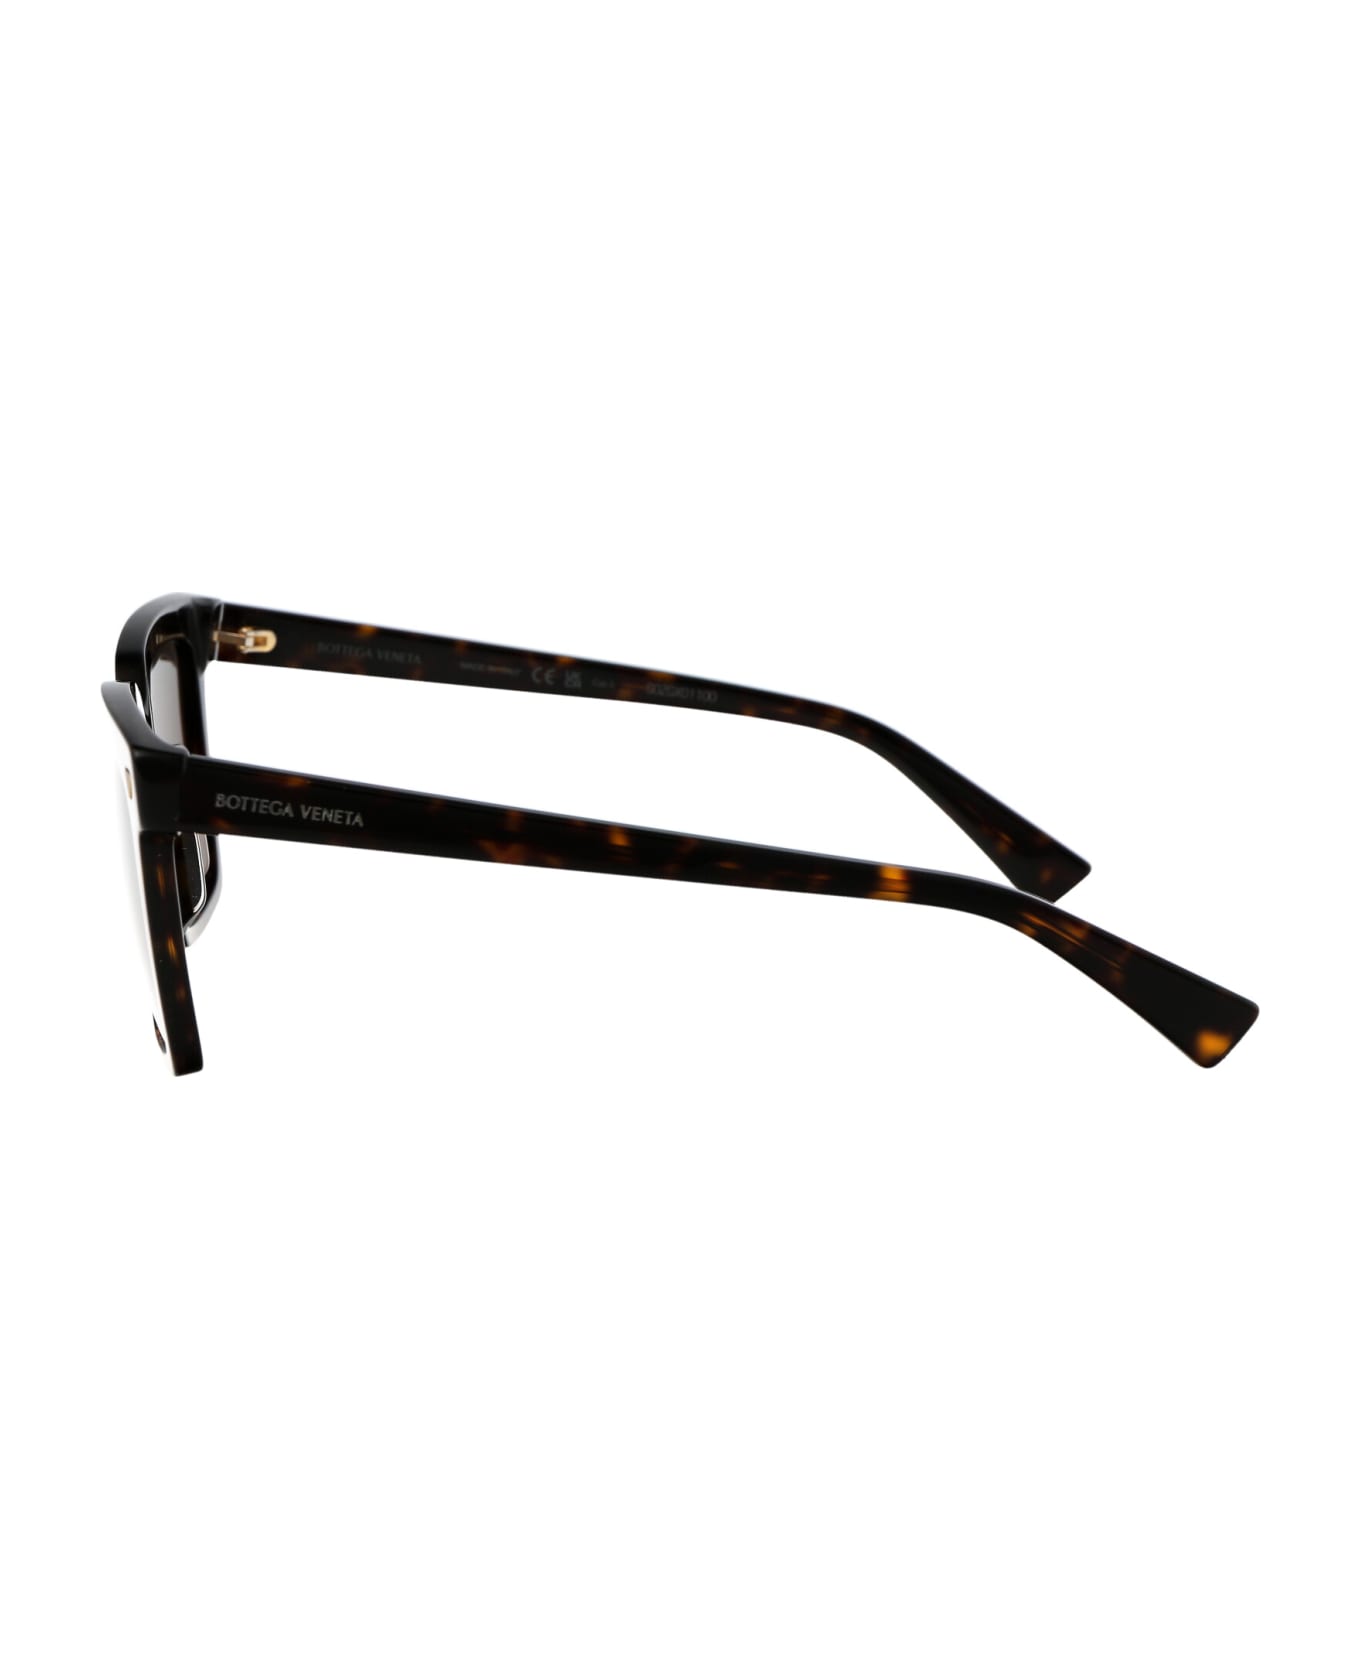 Bottega Veneta Eyewear Bv1254s Sunglasses - 002 HAVANA HAVANA BROWN サングラス